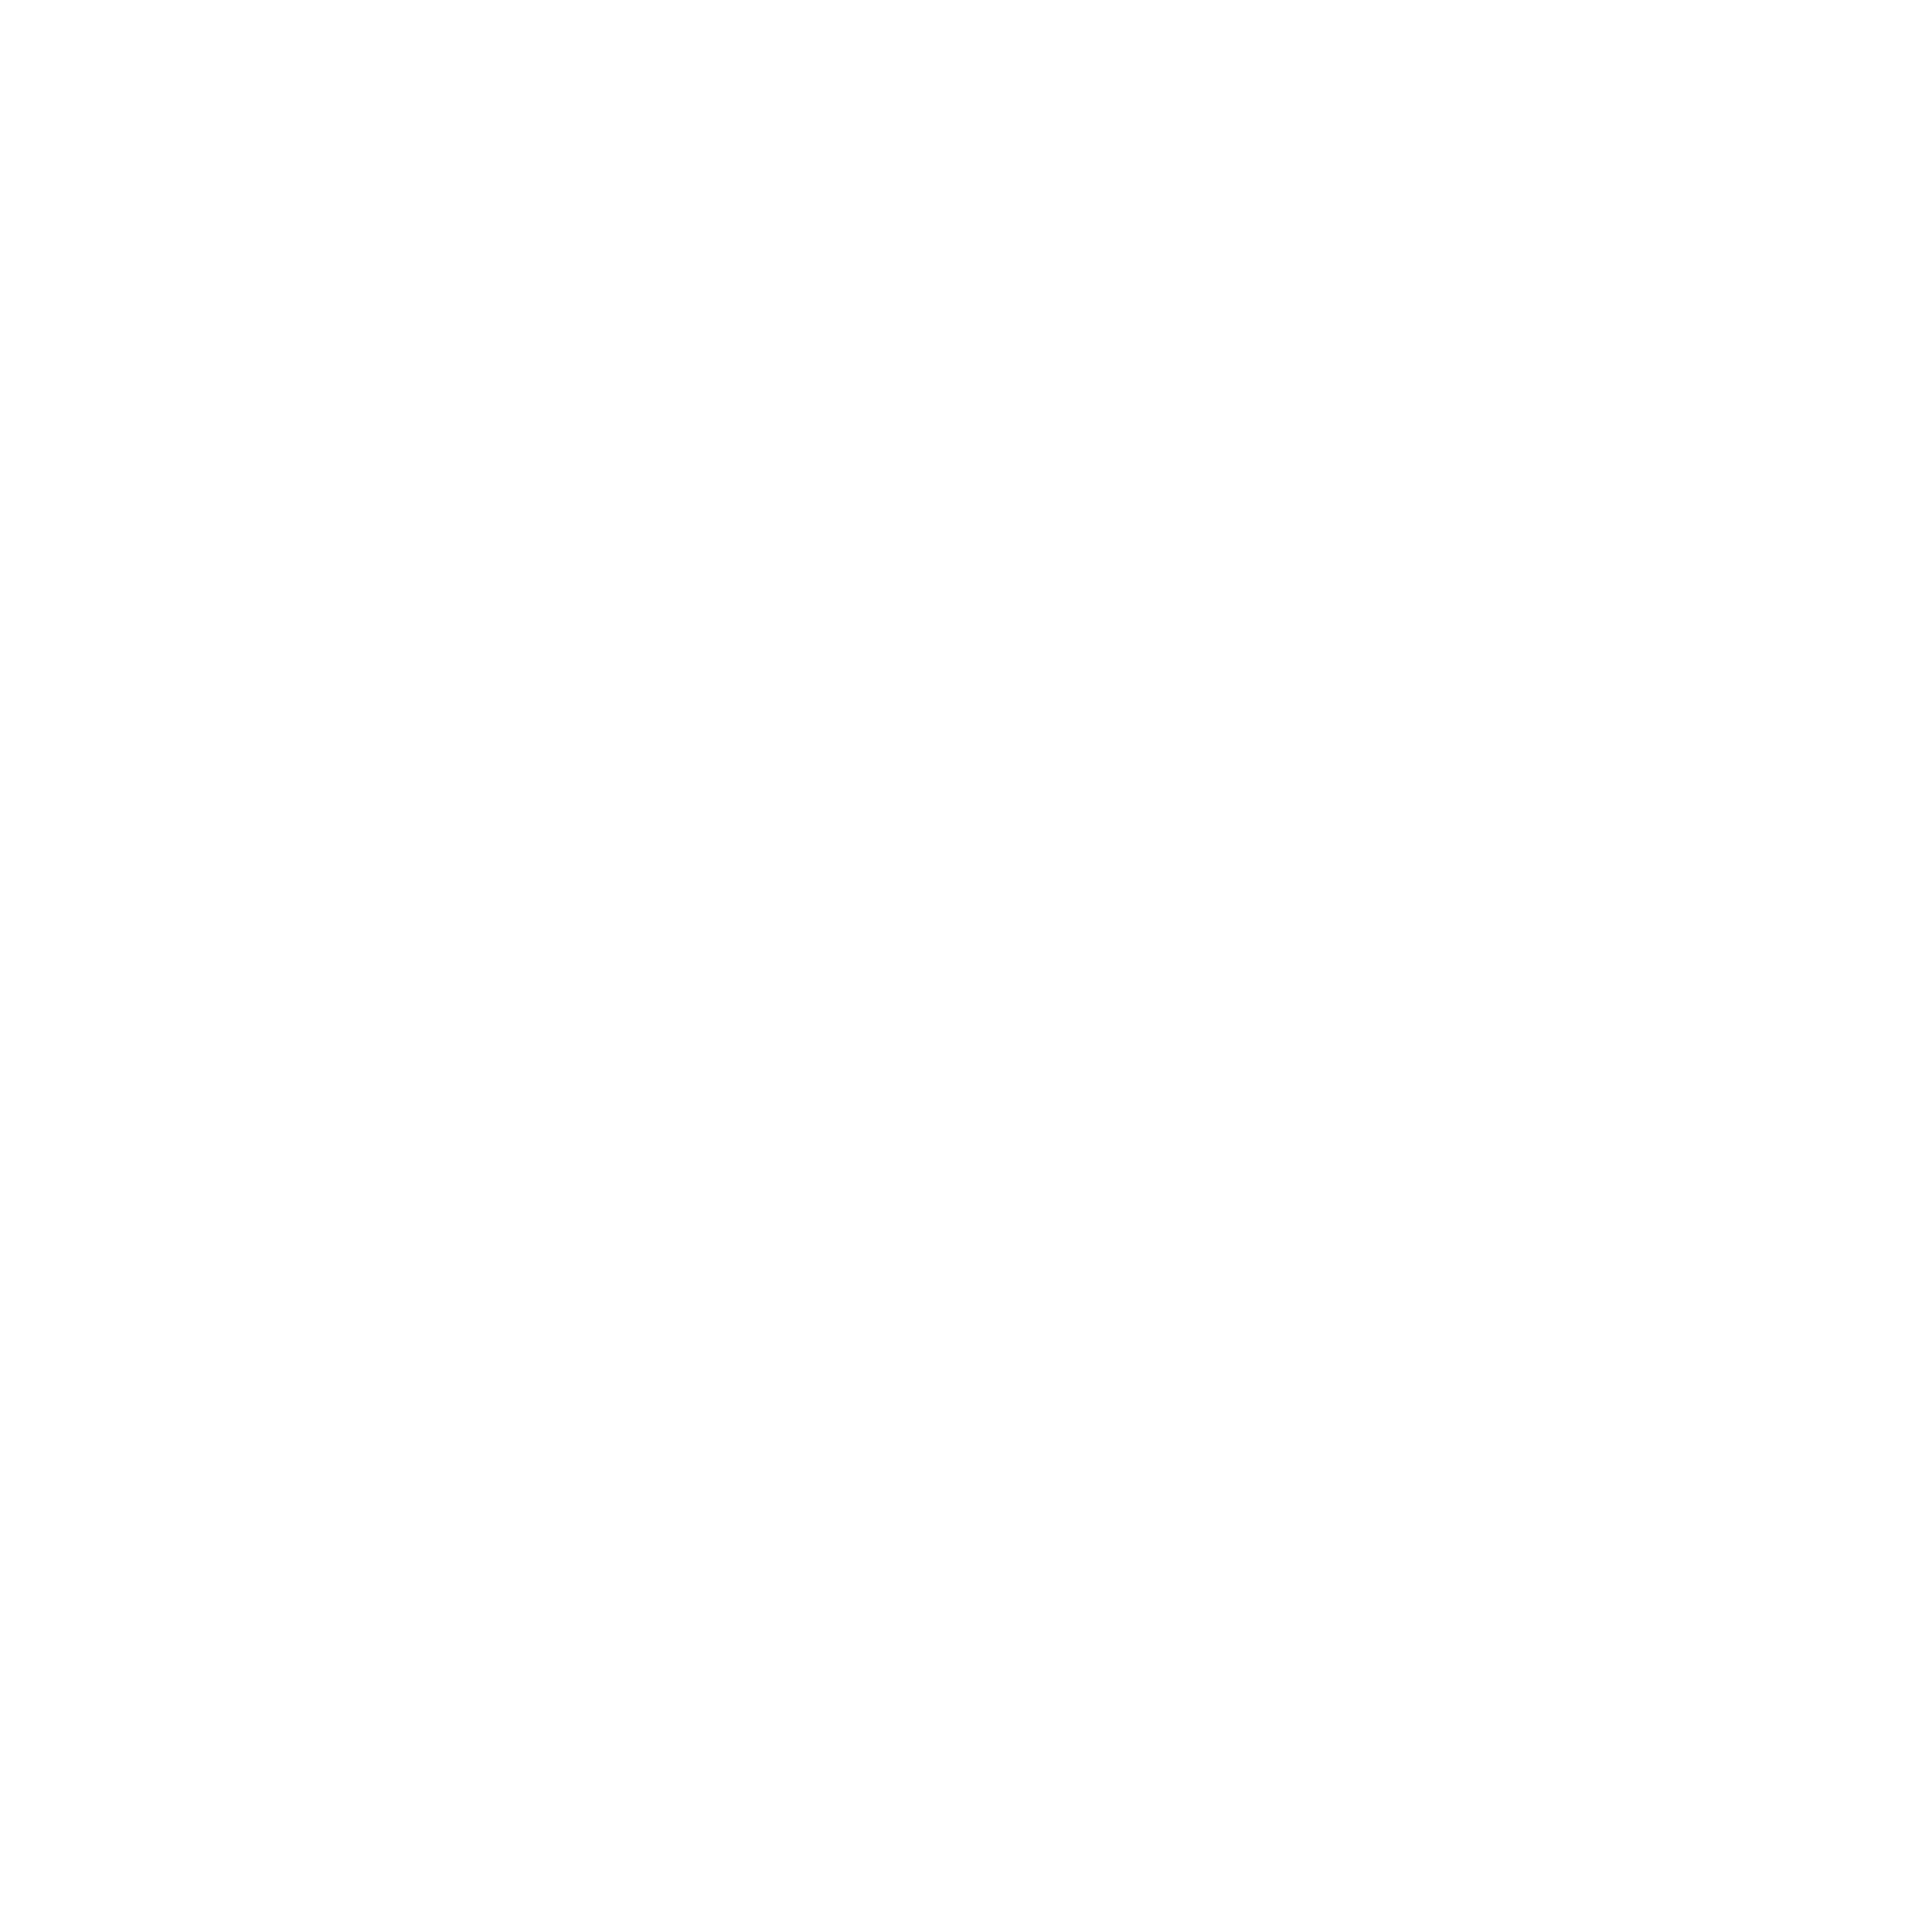 American Century Logo - American Century Logo PNG Transparent & SVG Vector - Freebie Supply